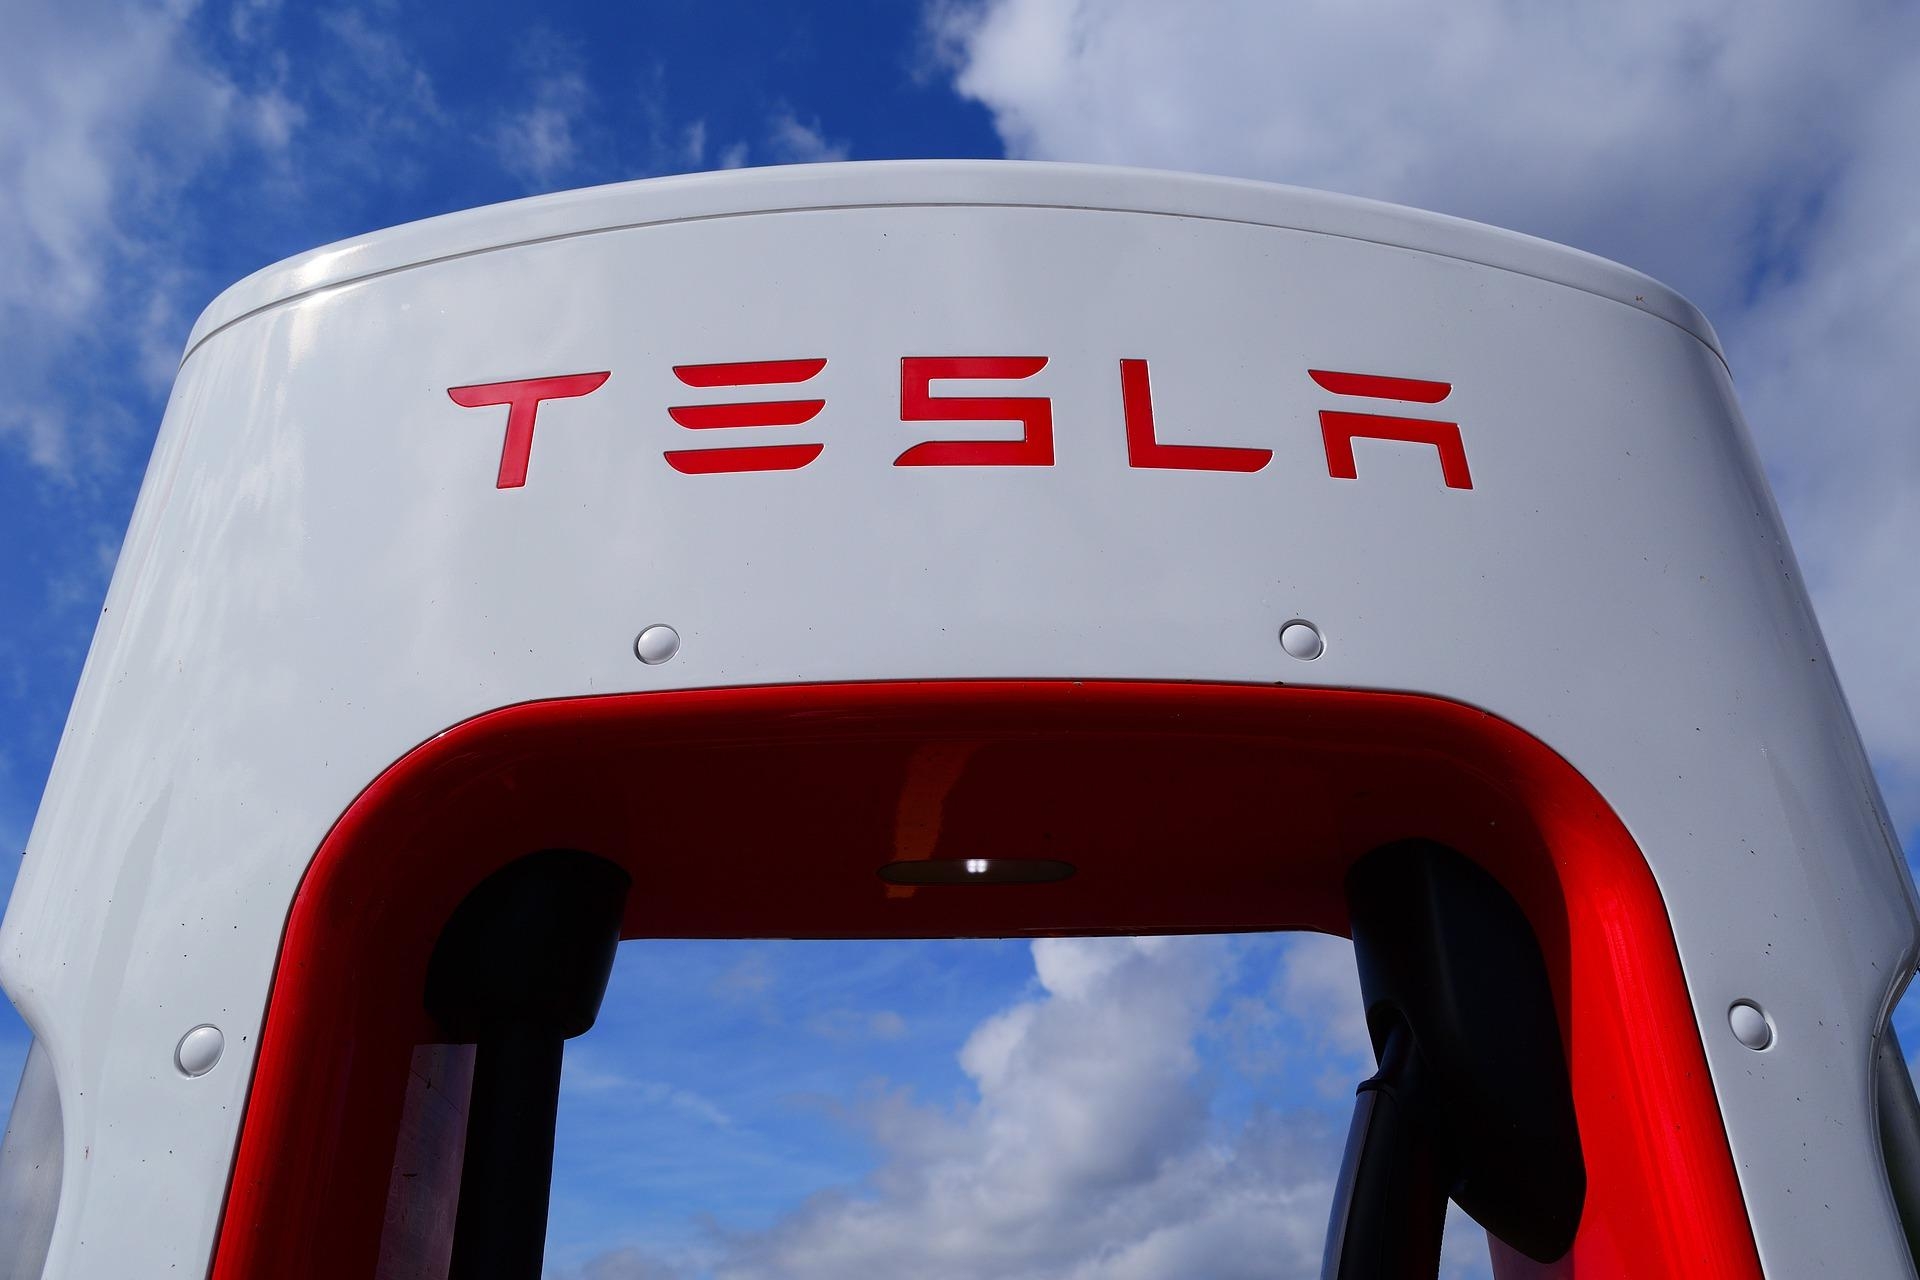 Tesla มียอดขายรถยนต์ที่ผลิตในจีนของเดือน ต.ค. 54,391 คัน